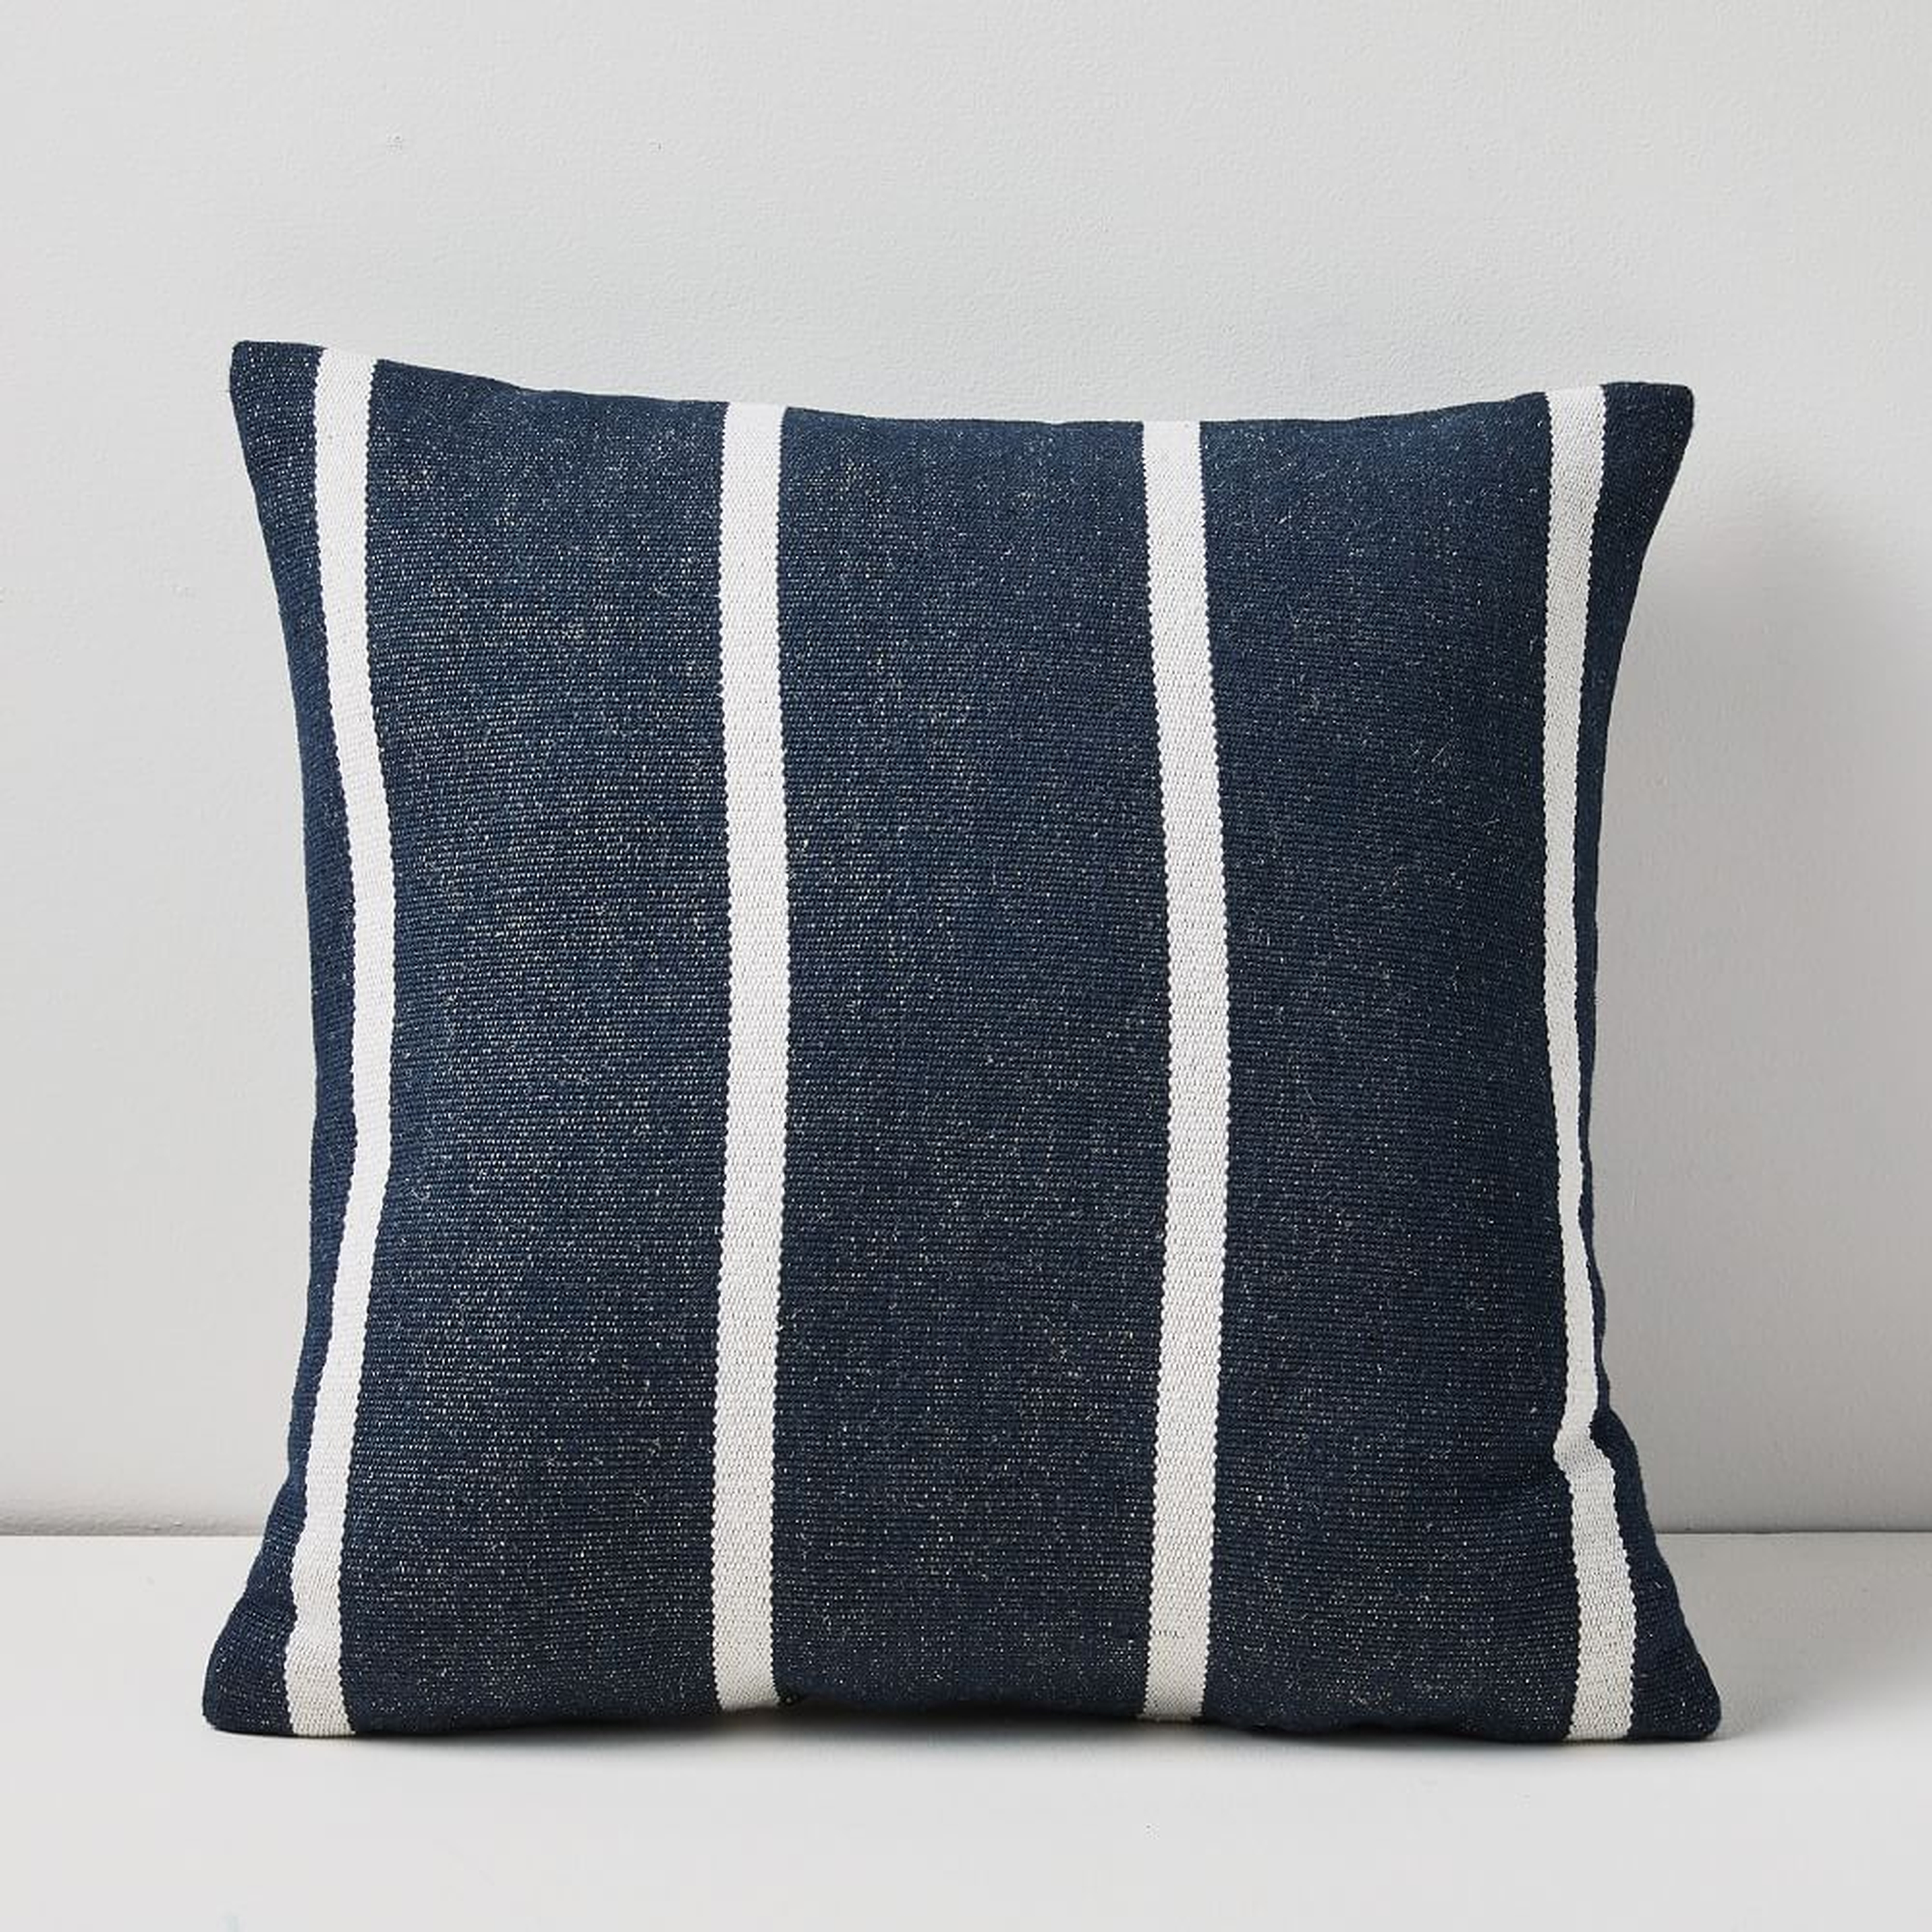 Outdoor Simple Stripe Pillow, 24"x24", Midnight, Set of 2 - West Elm